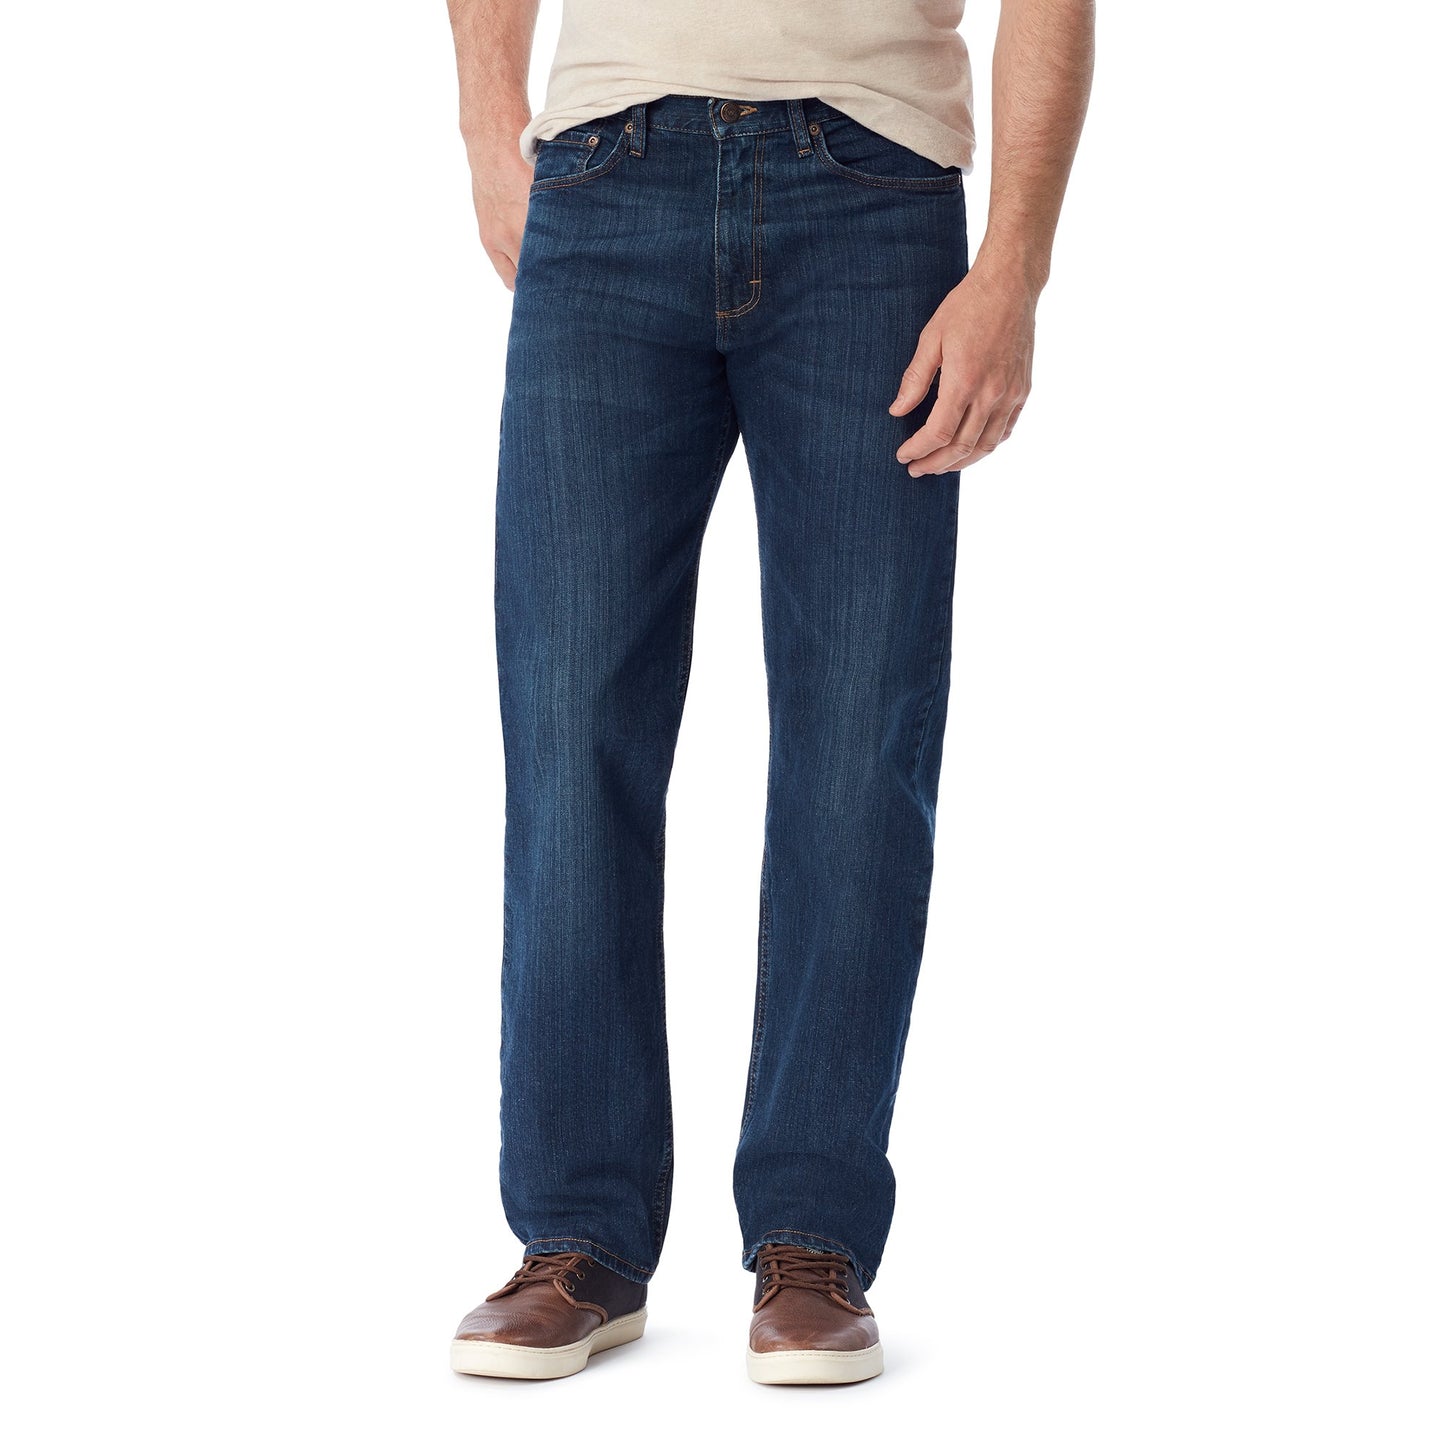 Wrangler Authentics Men's Classic 5-Pocket Relaxed Fit Jean, Flex Dark, 36W x 30L